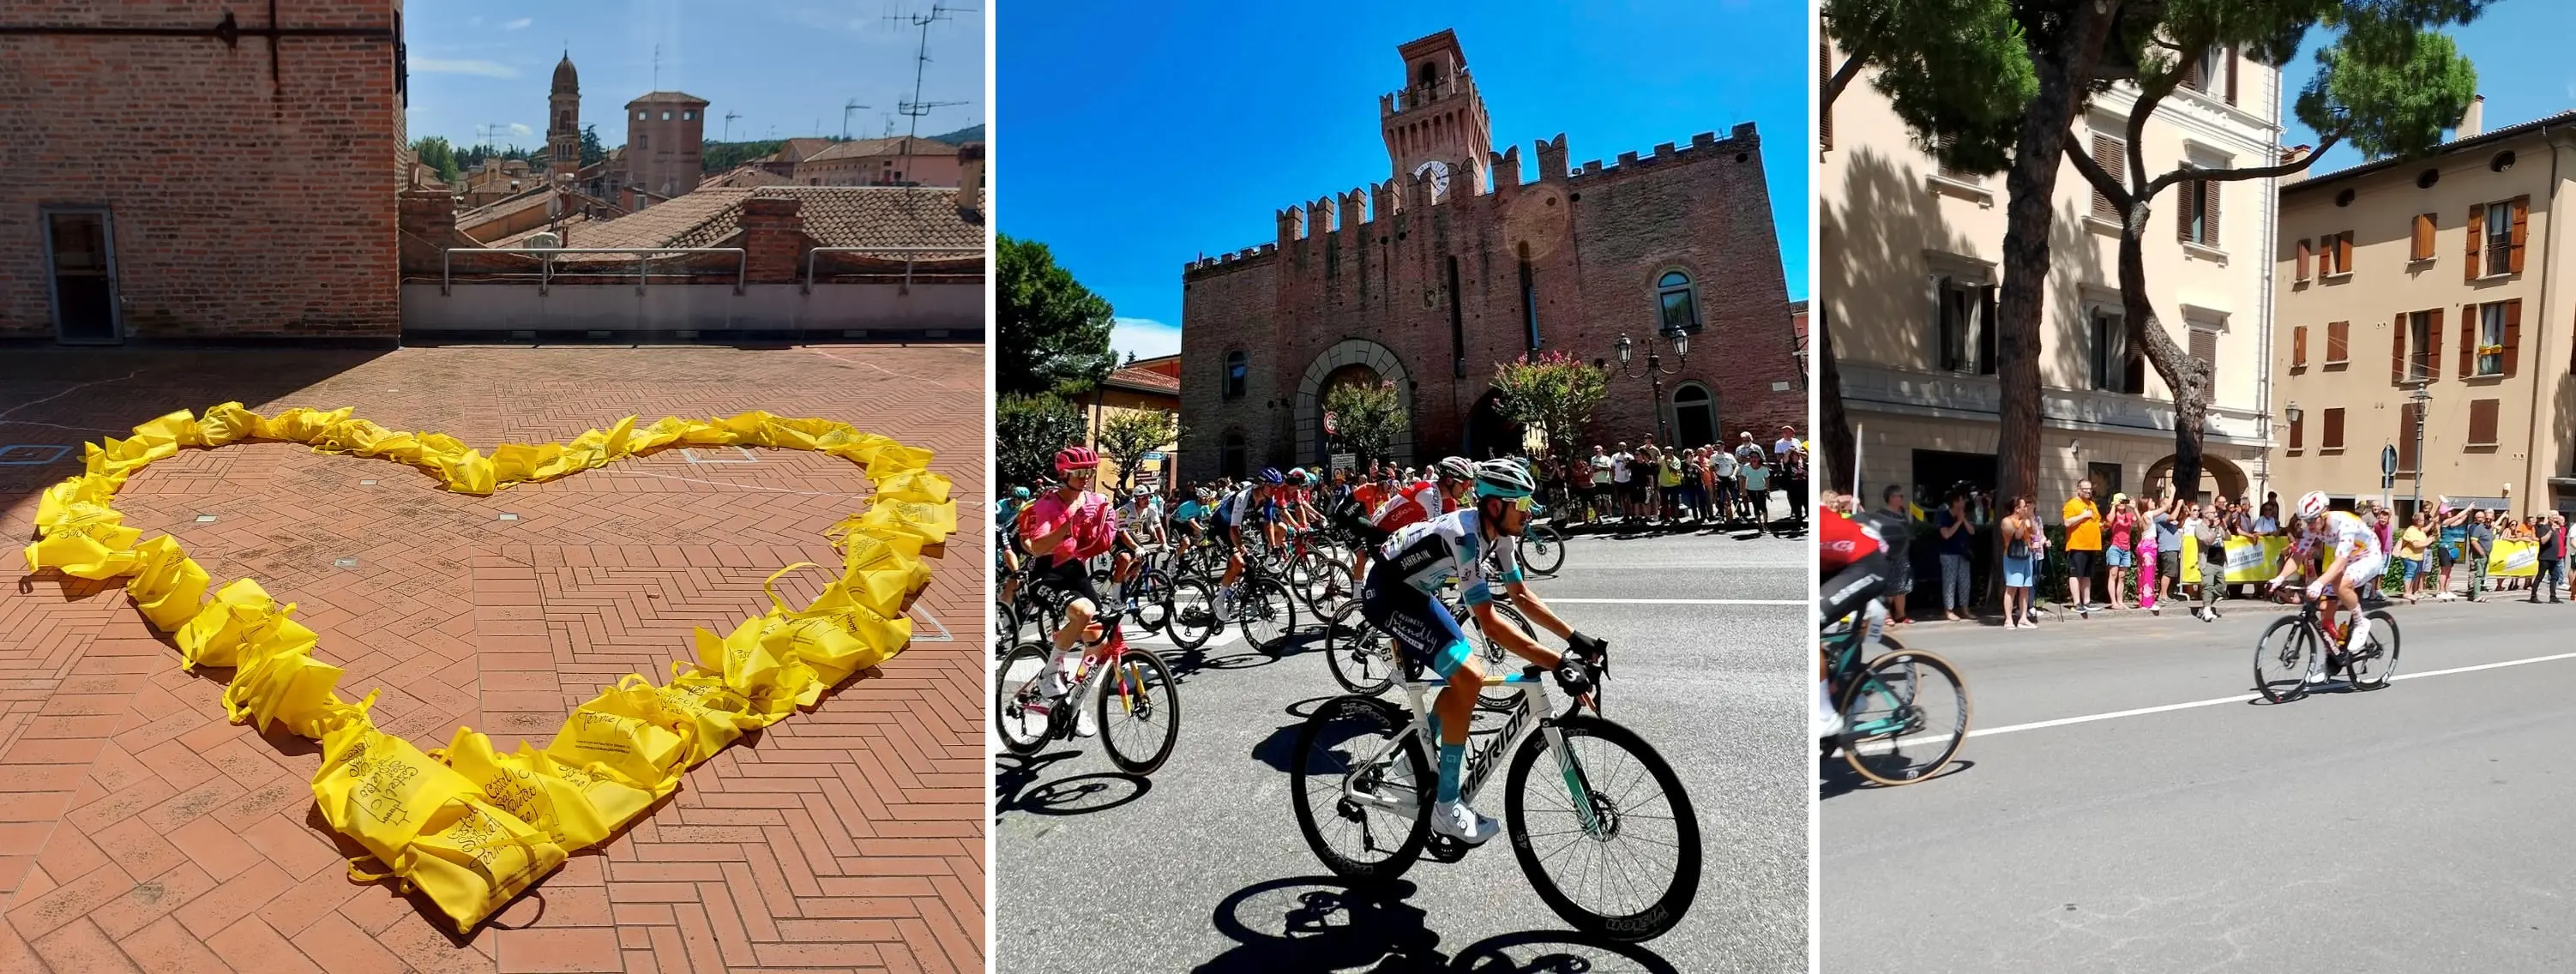 Tour de France: foto e video dell